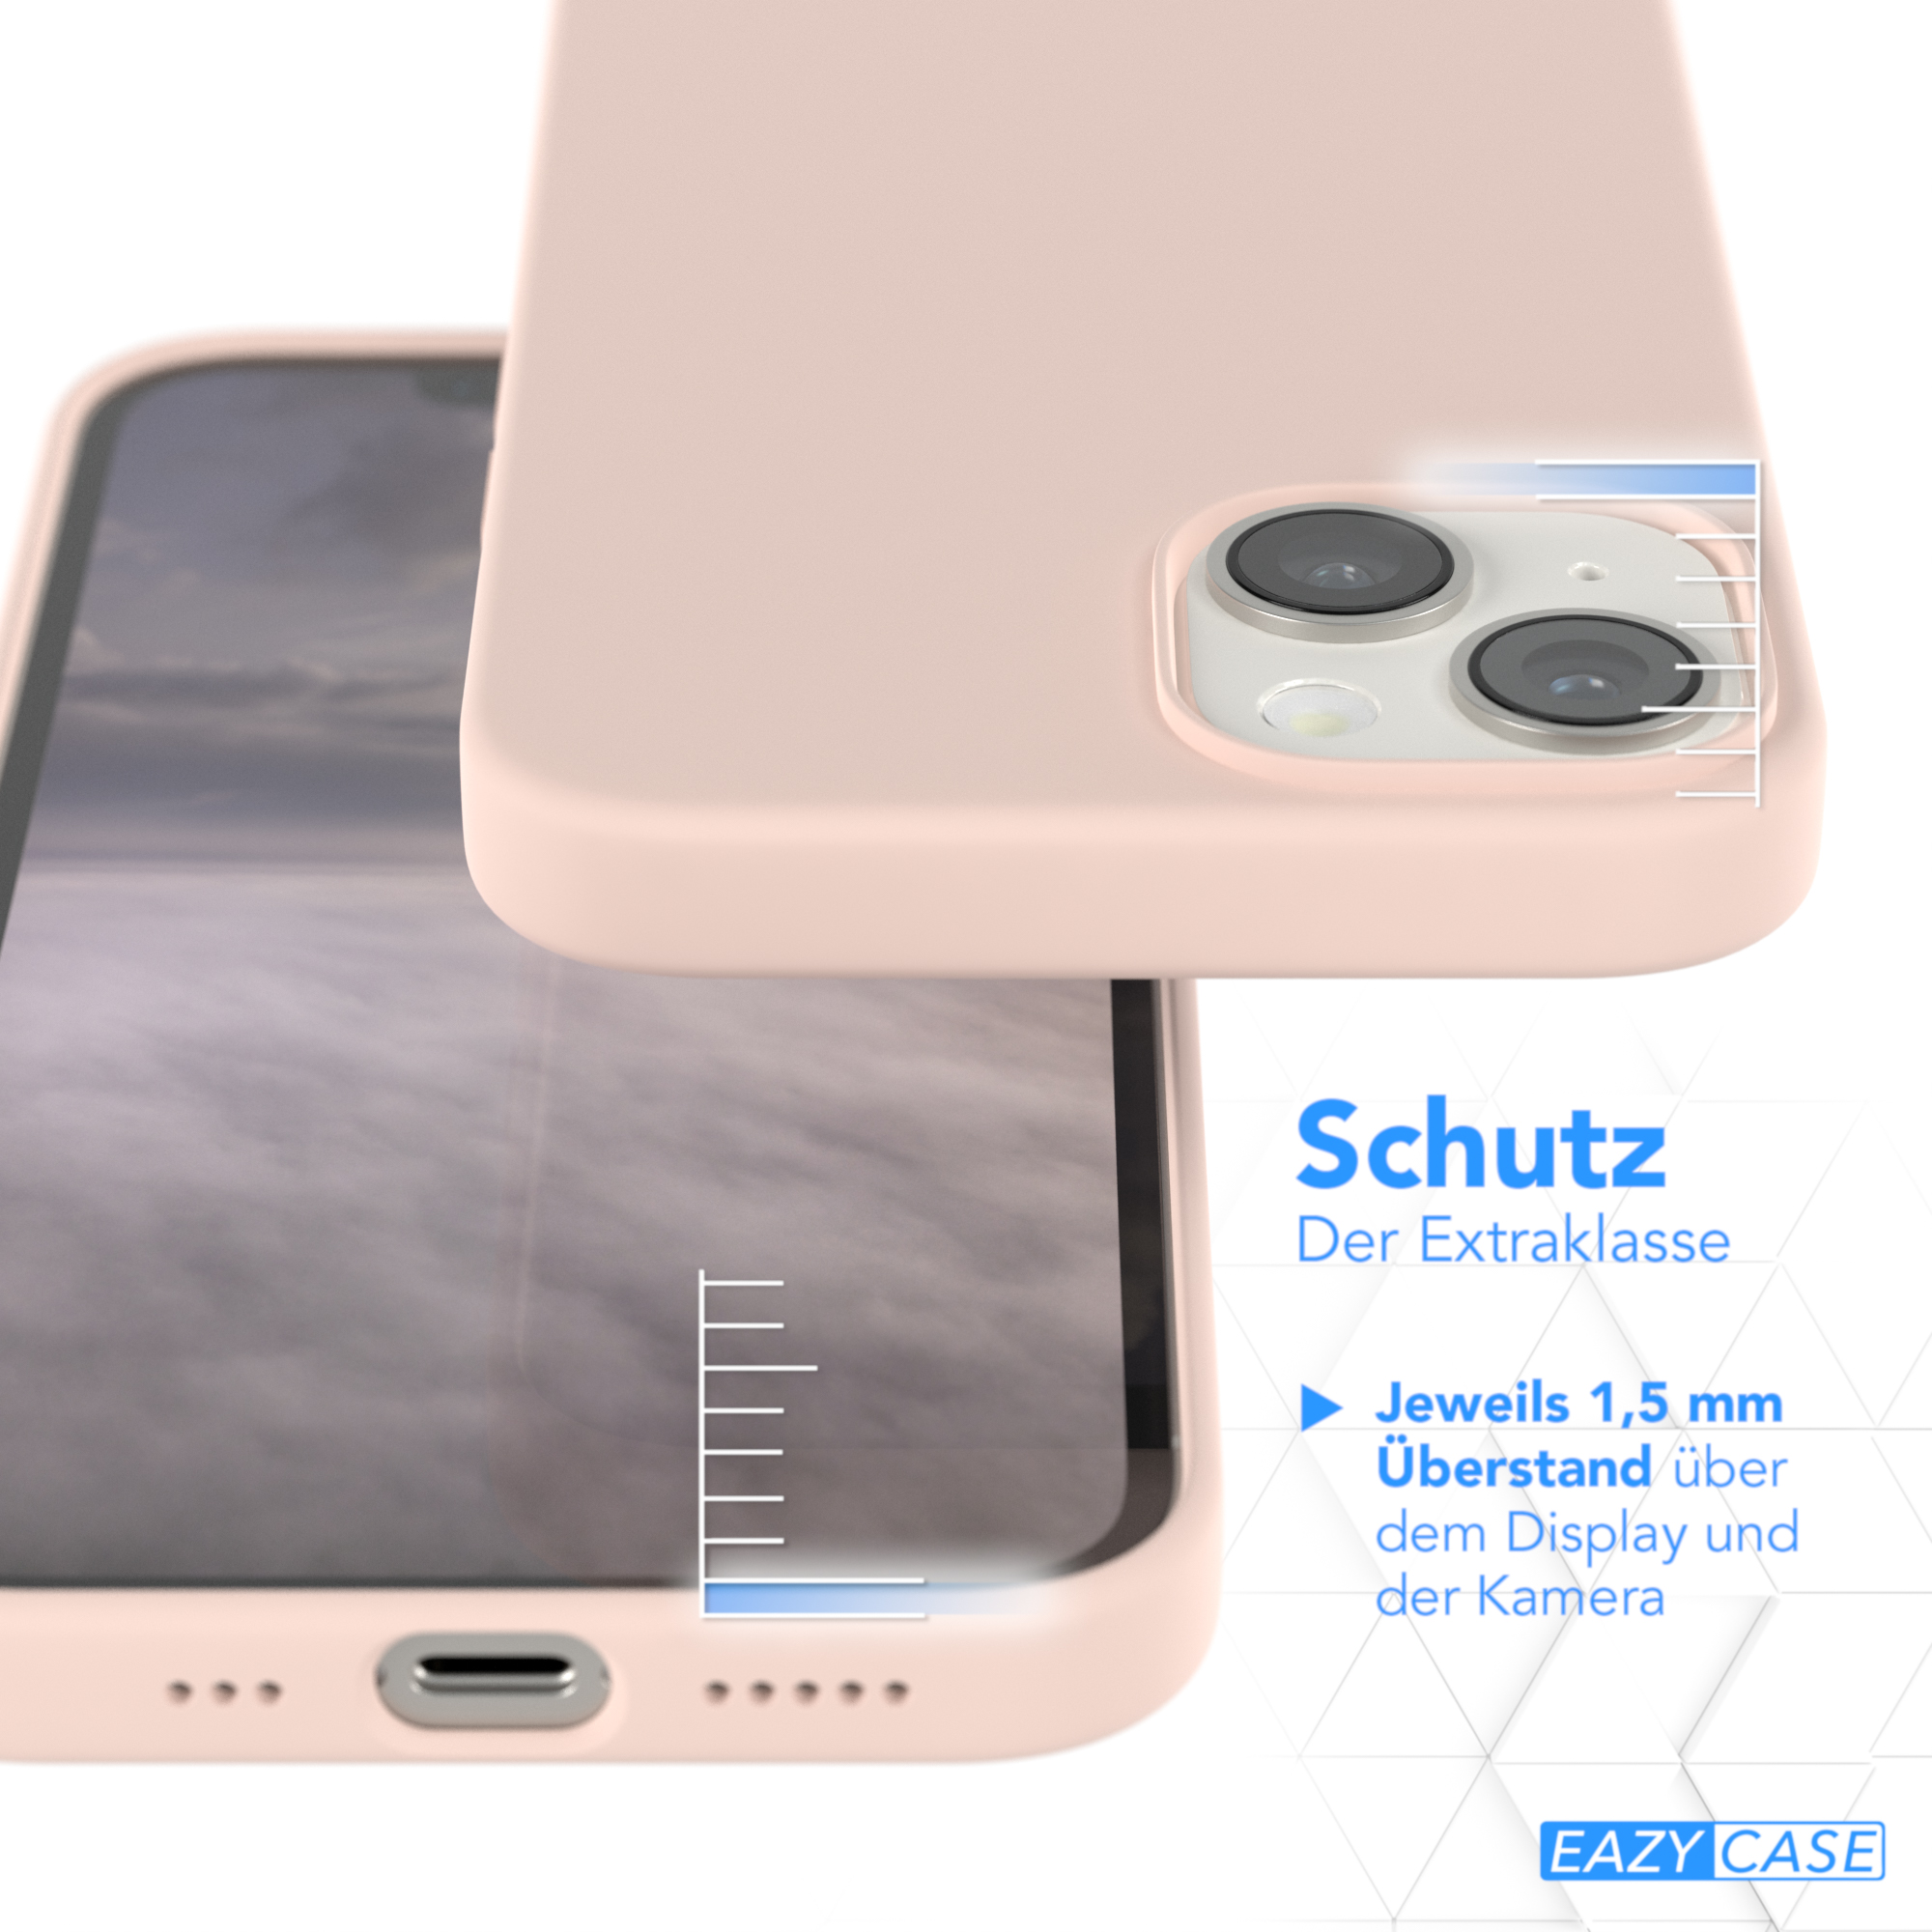 EAZY CASE Premium Silikon Handycase MagSafe, Apple, Braun iPhone mit 14, Backcover, Rosa